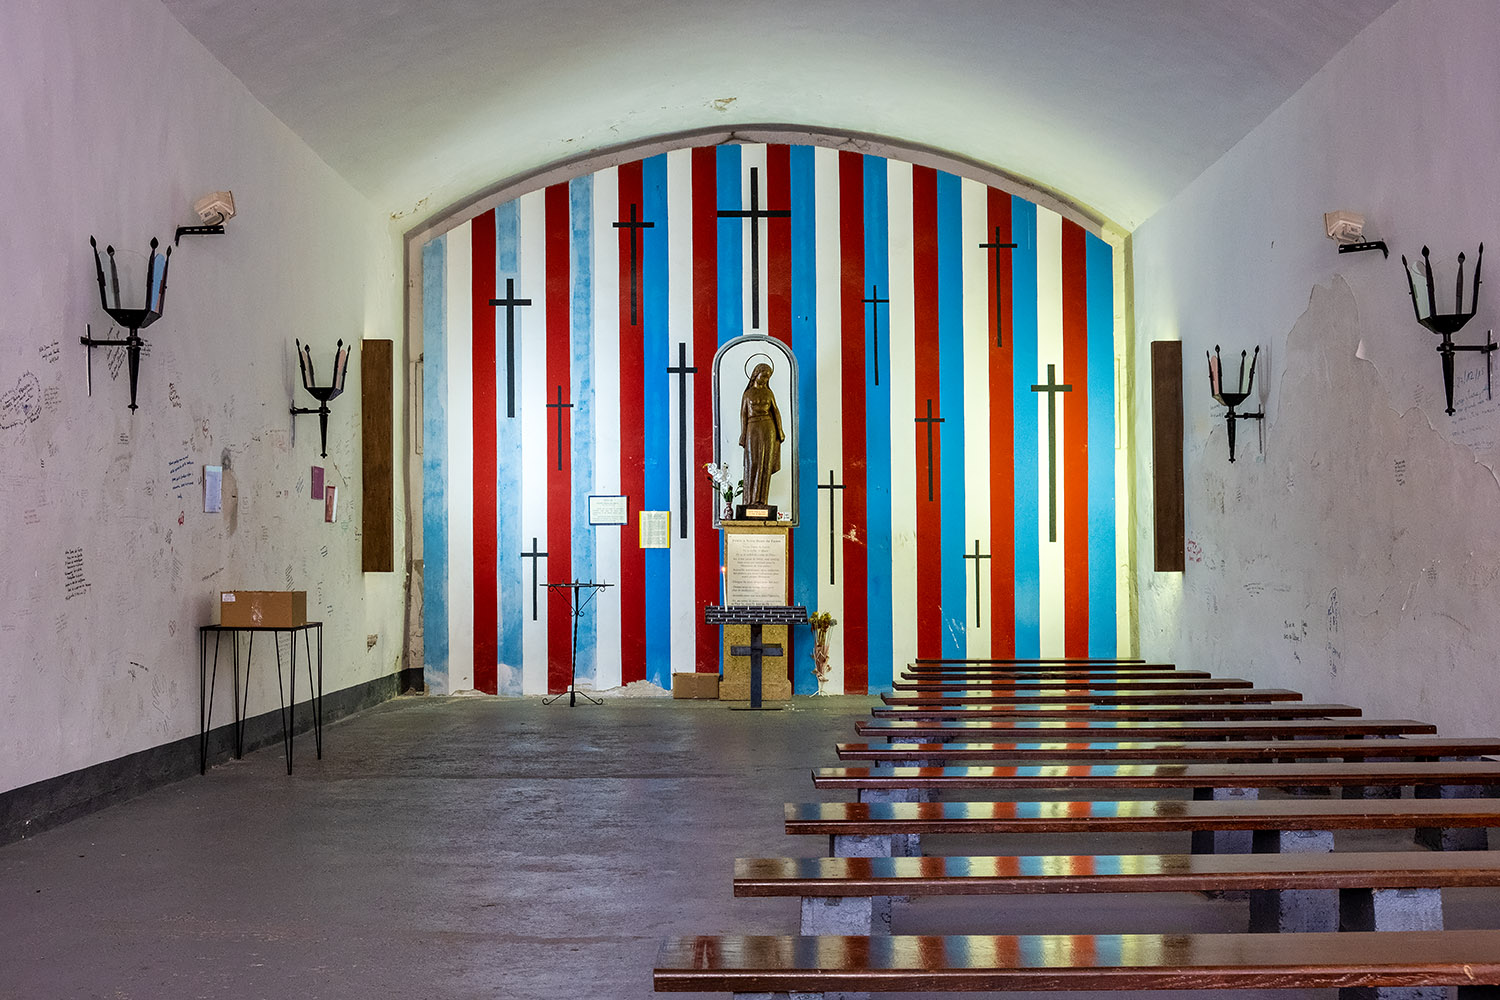 Inside the sanctuary